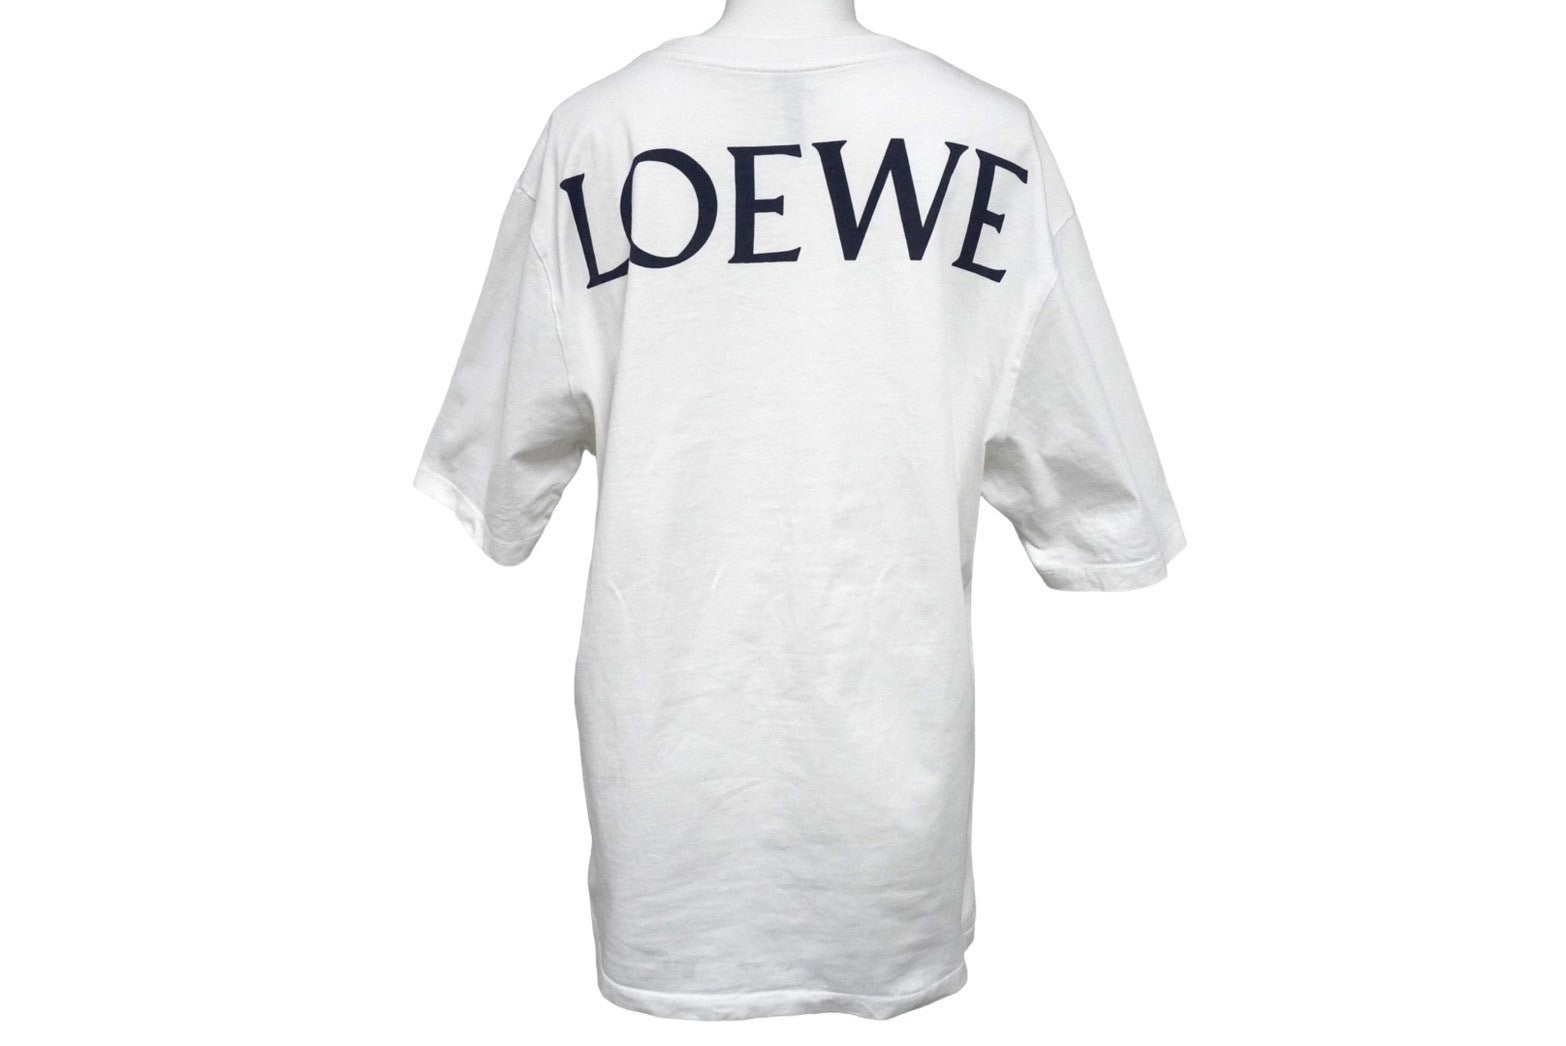 LOEWE 18ss T-shirt | www.150.illinois.edu